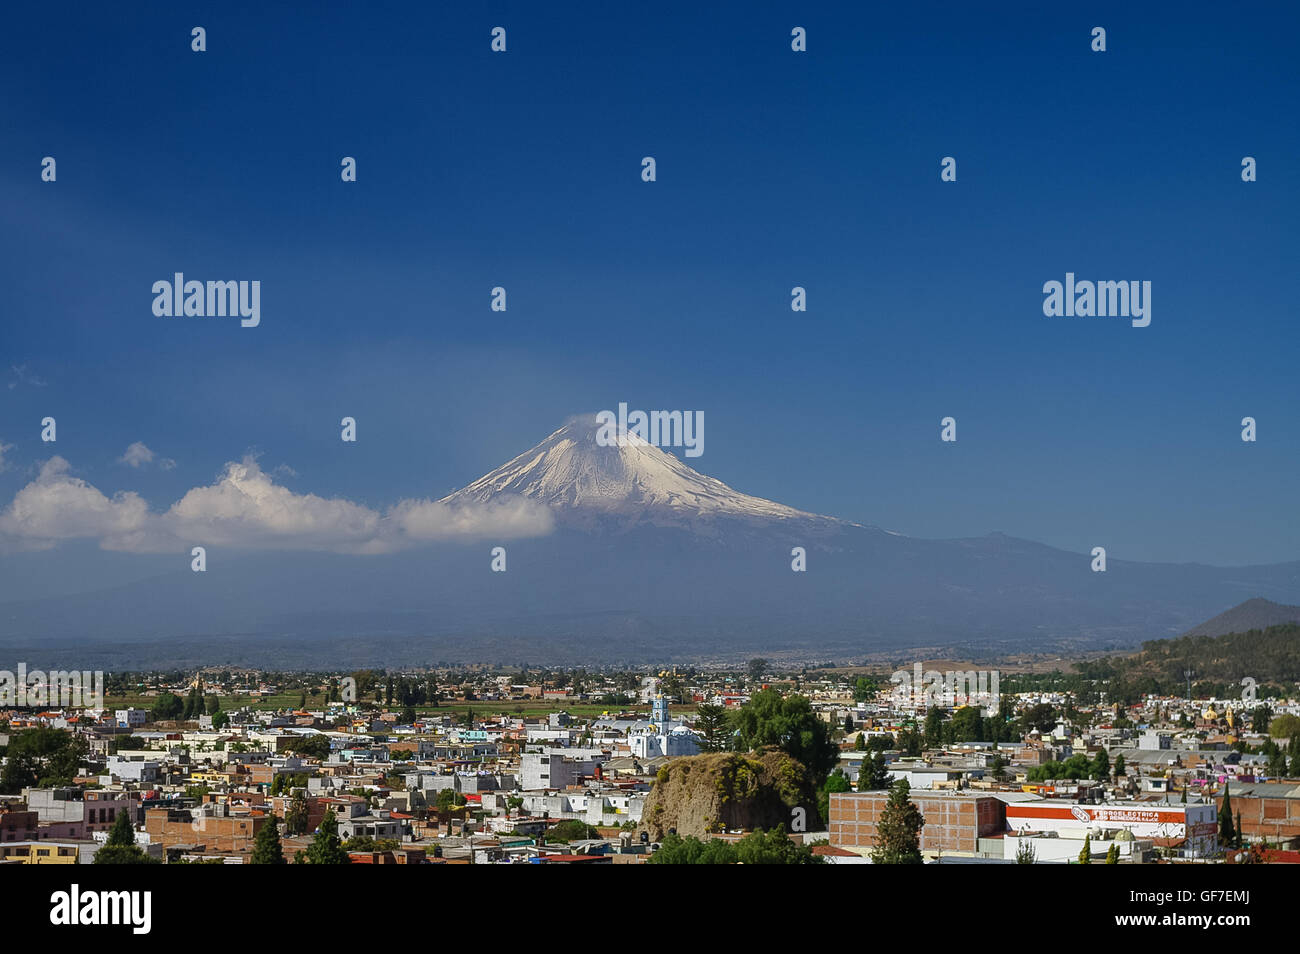 Popocatepetl Volcano Towering over the town of Puebla, Mexico Stock Photo